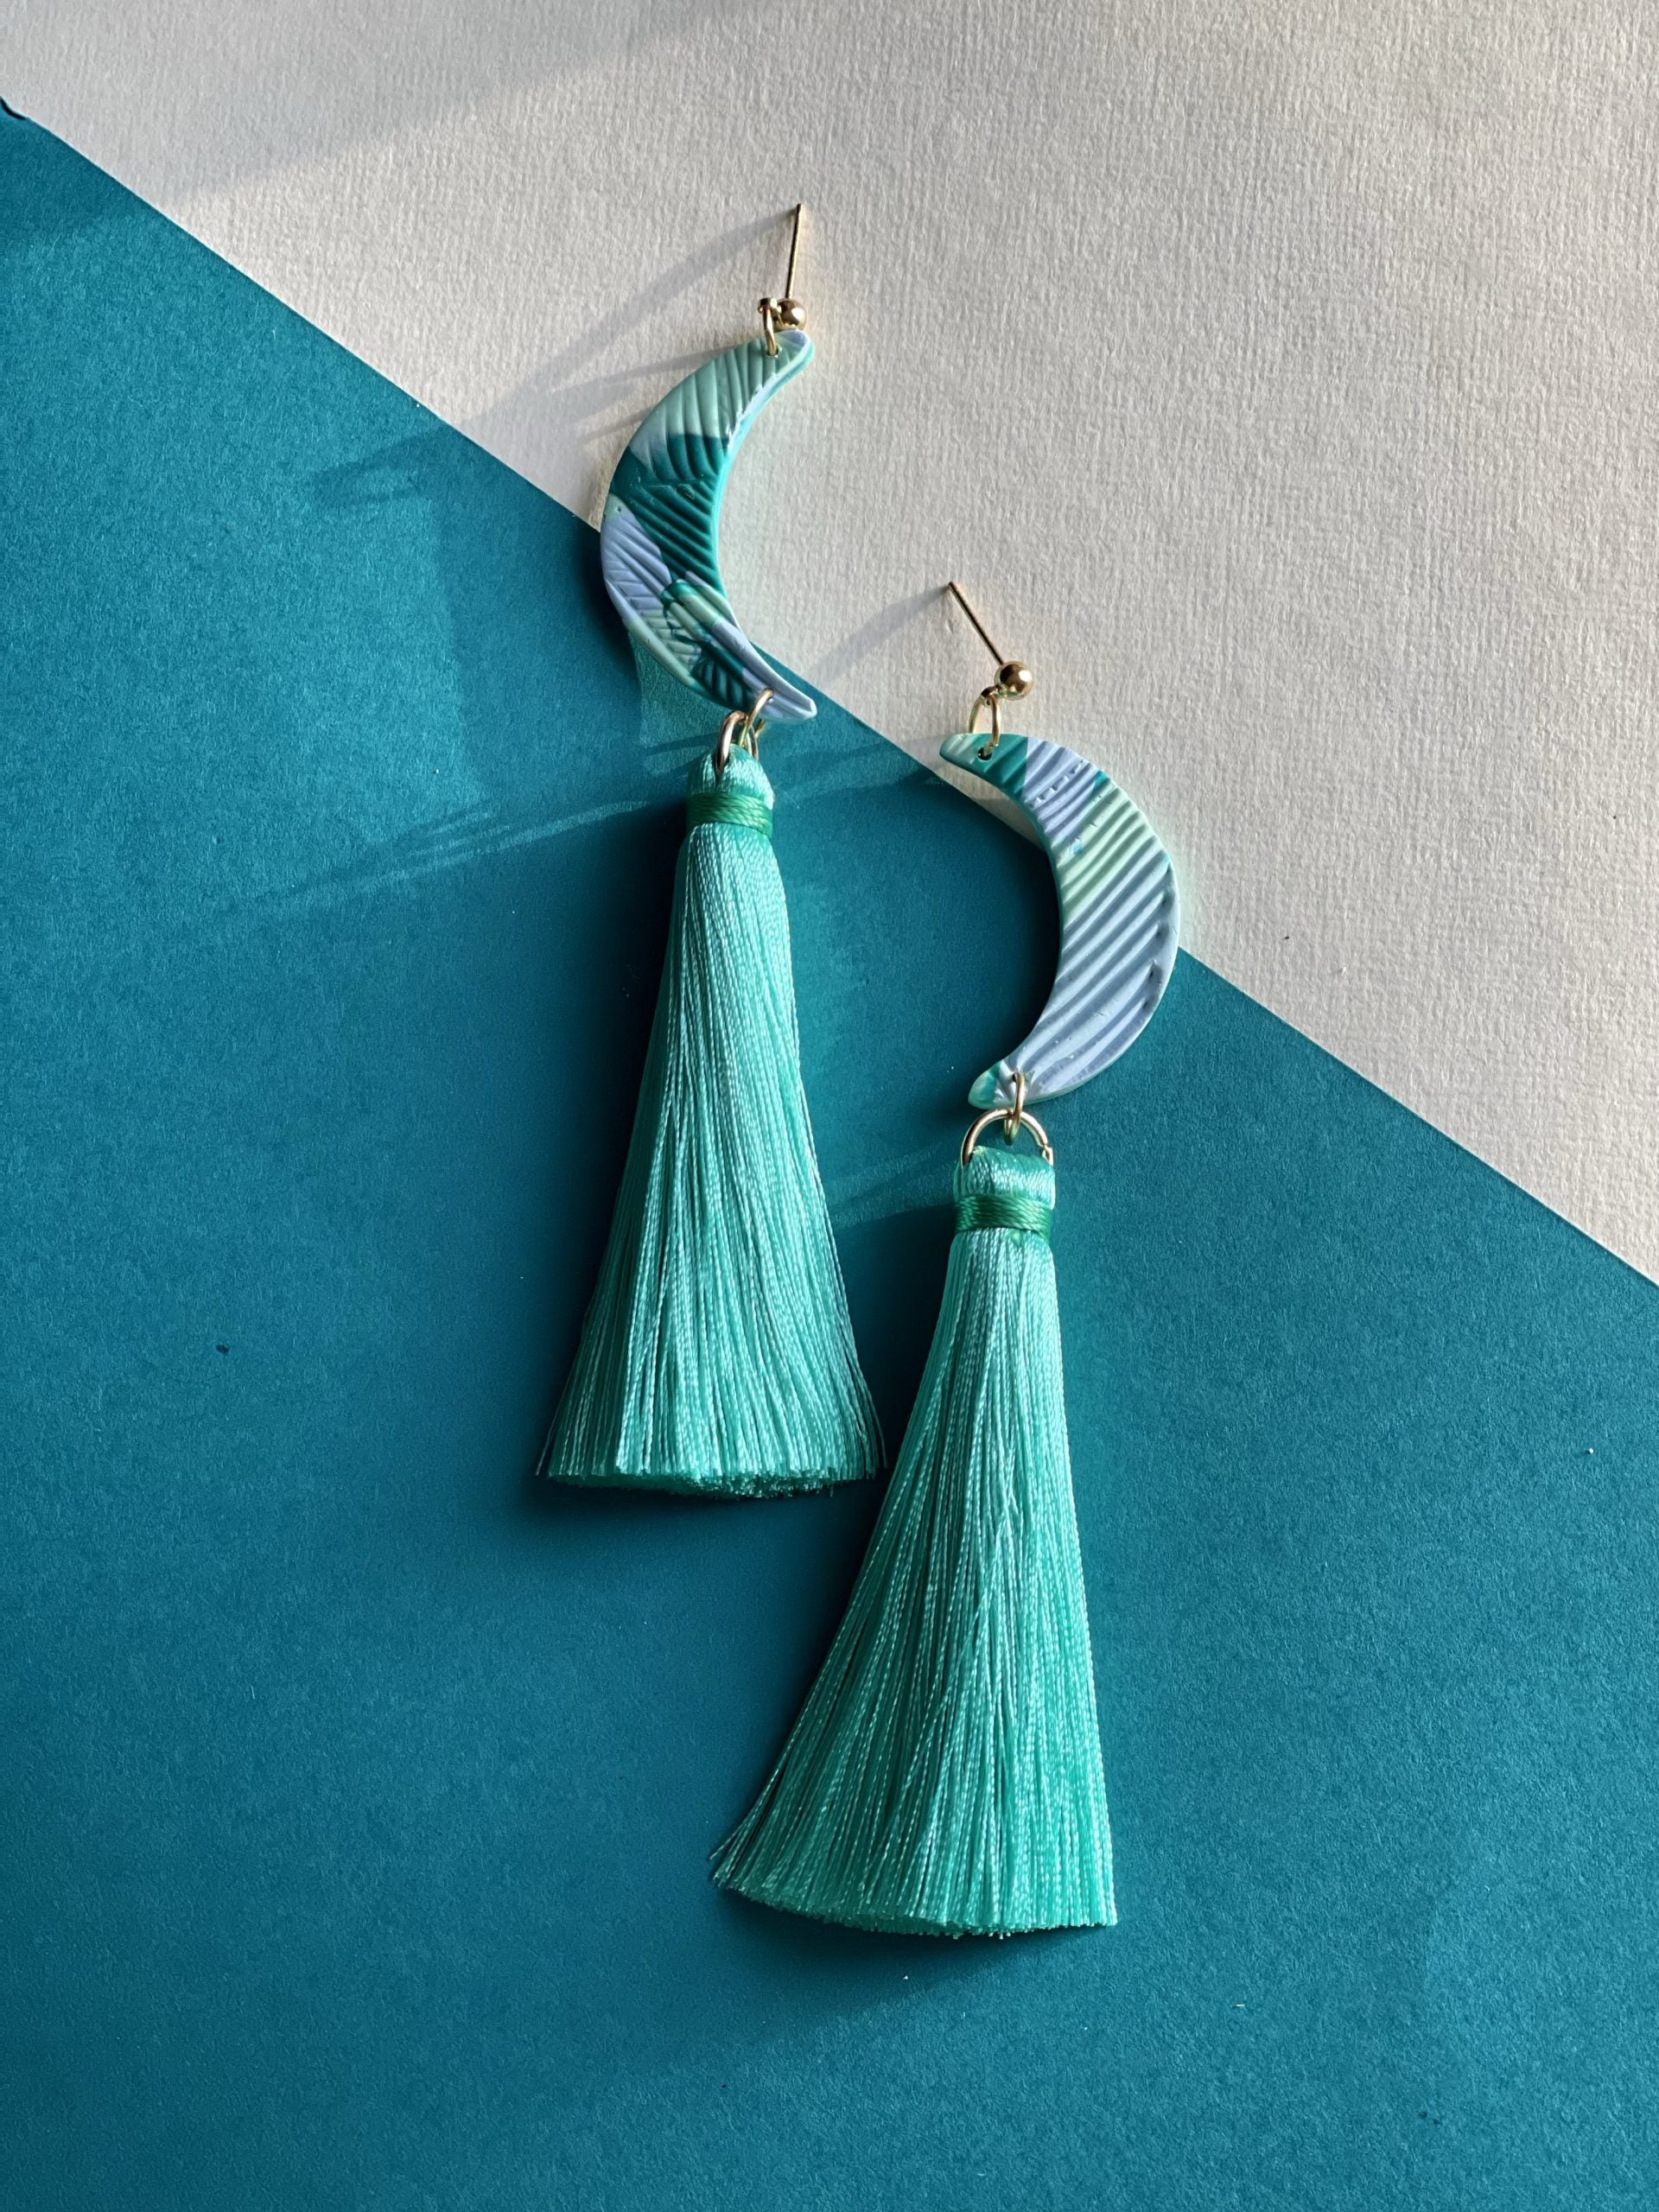 B.Lauren Designs Aquamarine (Half moon with Tassles) Earrings- A Swirl of turquoise design